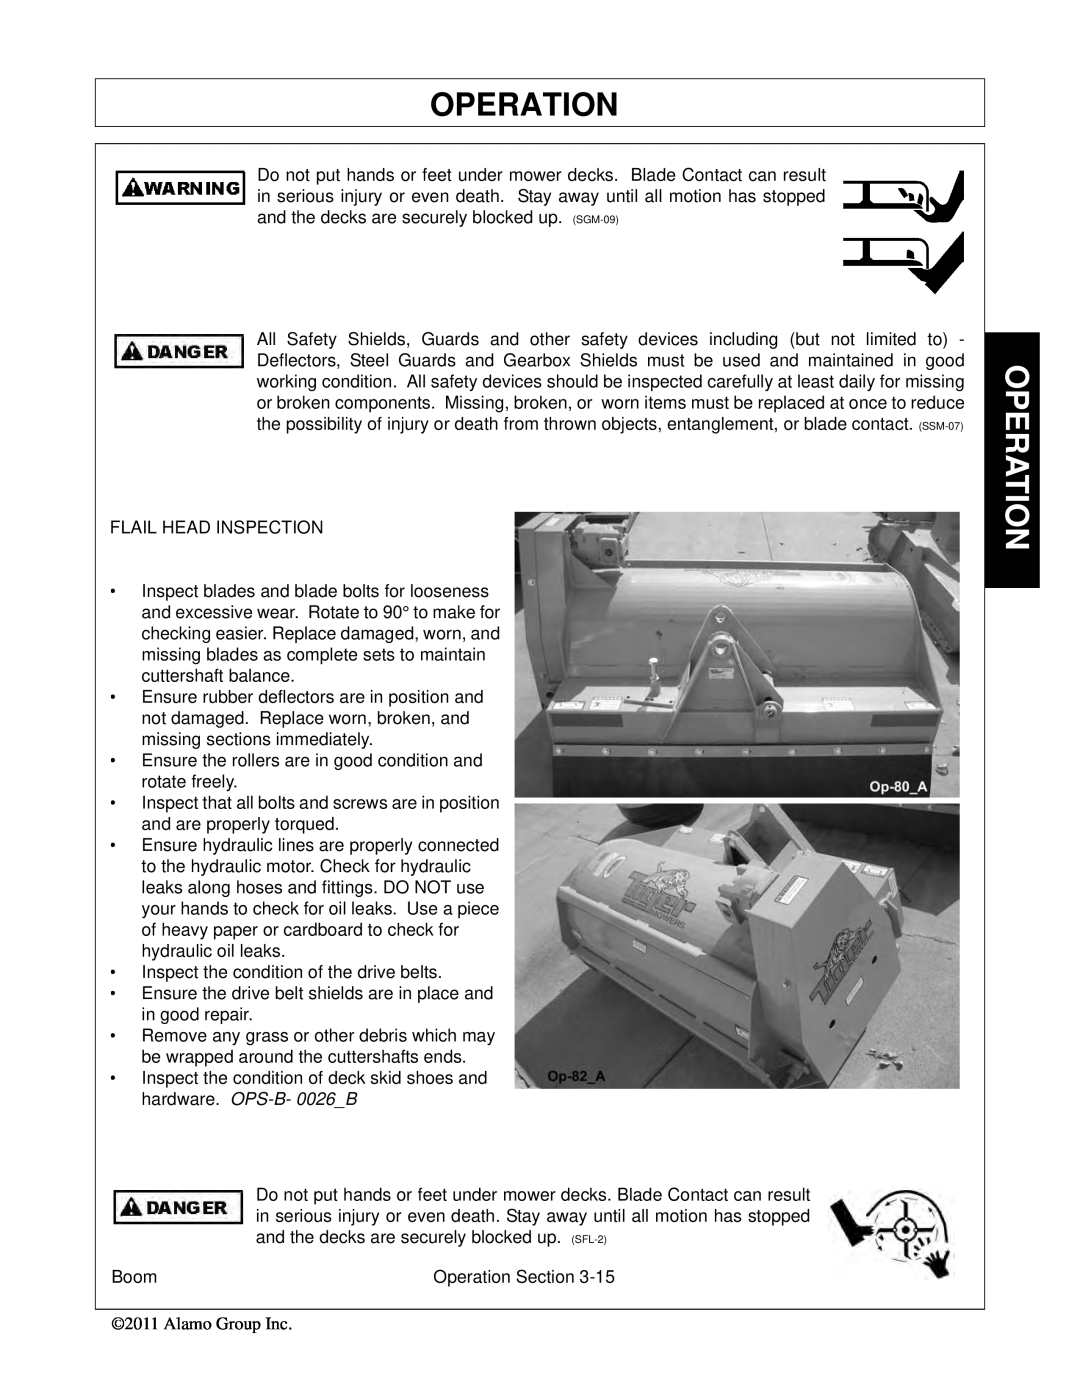 Tiger Products Co., Ltd 5093E, 5083E, 5101E manual Operation, Flail Head Inspection 